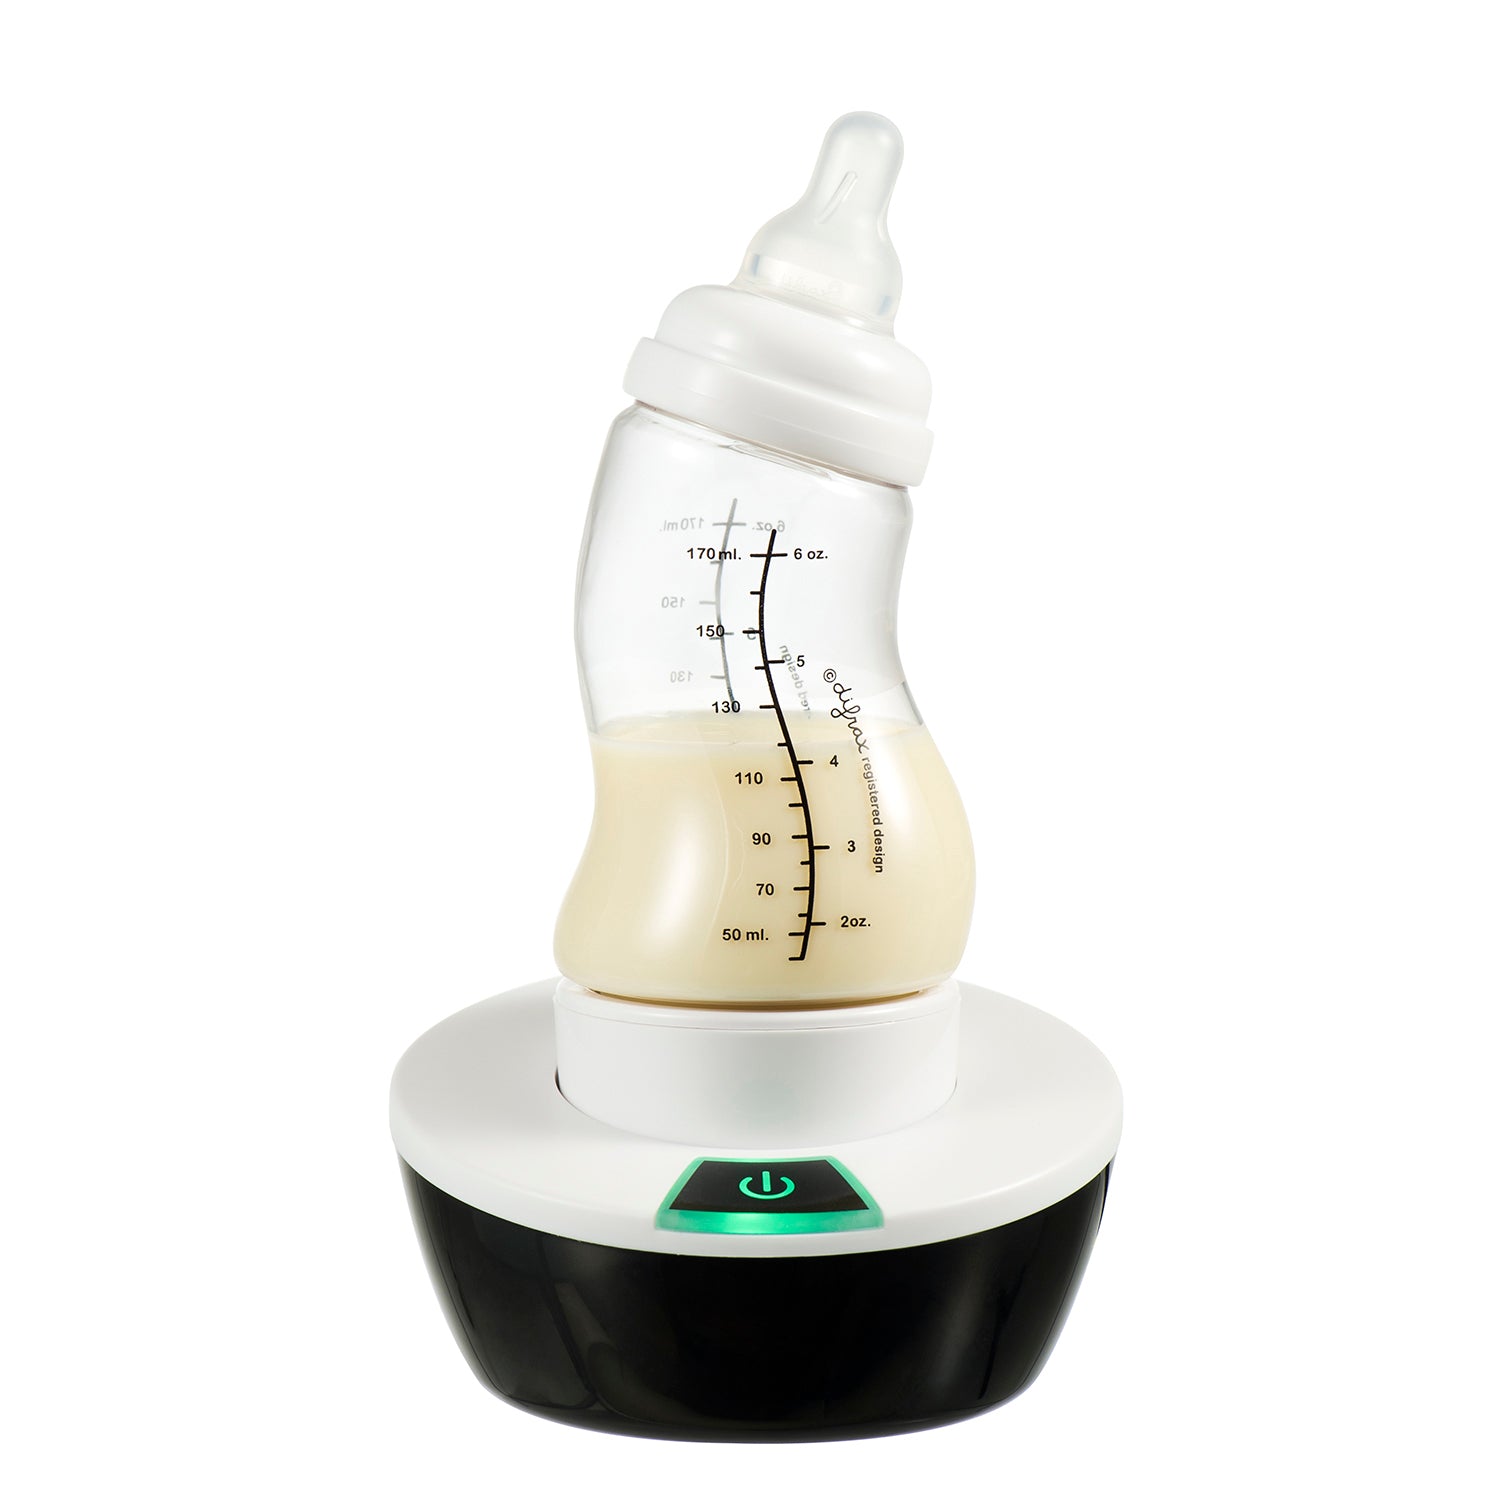 Basis voor Natural babyflessen (S-flessenwarmer oud model)